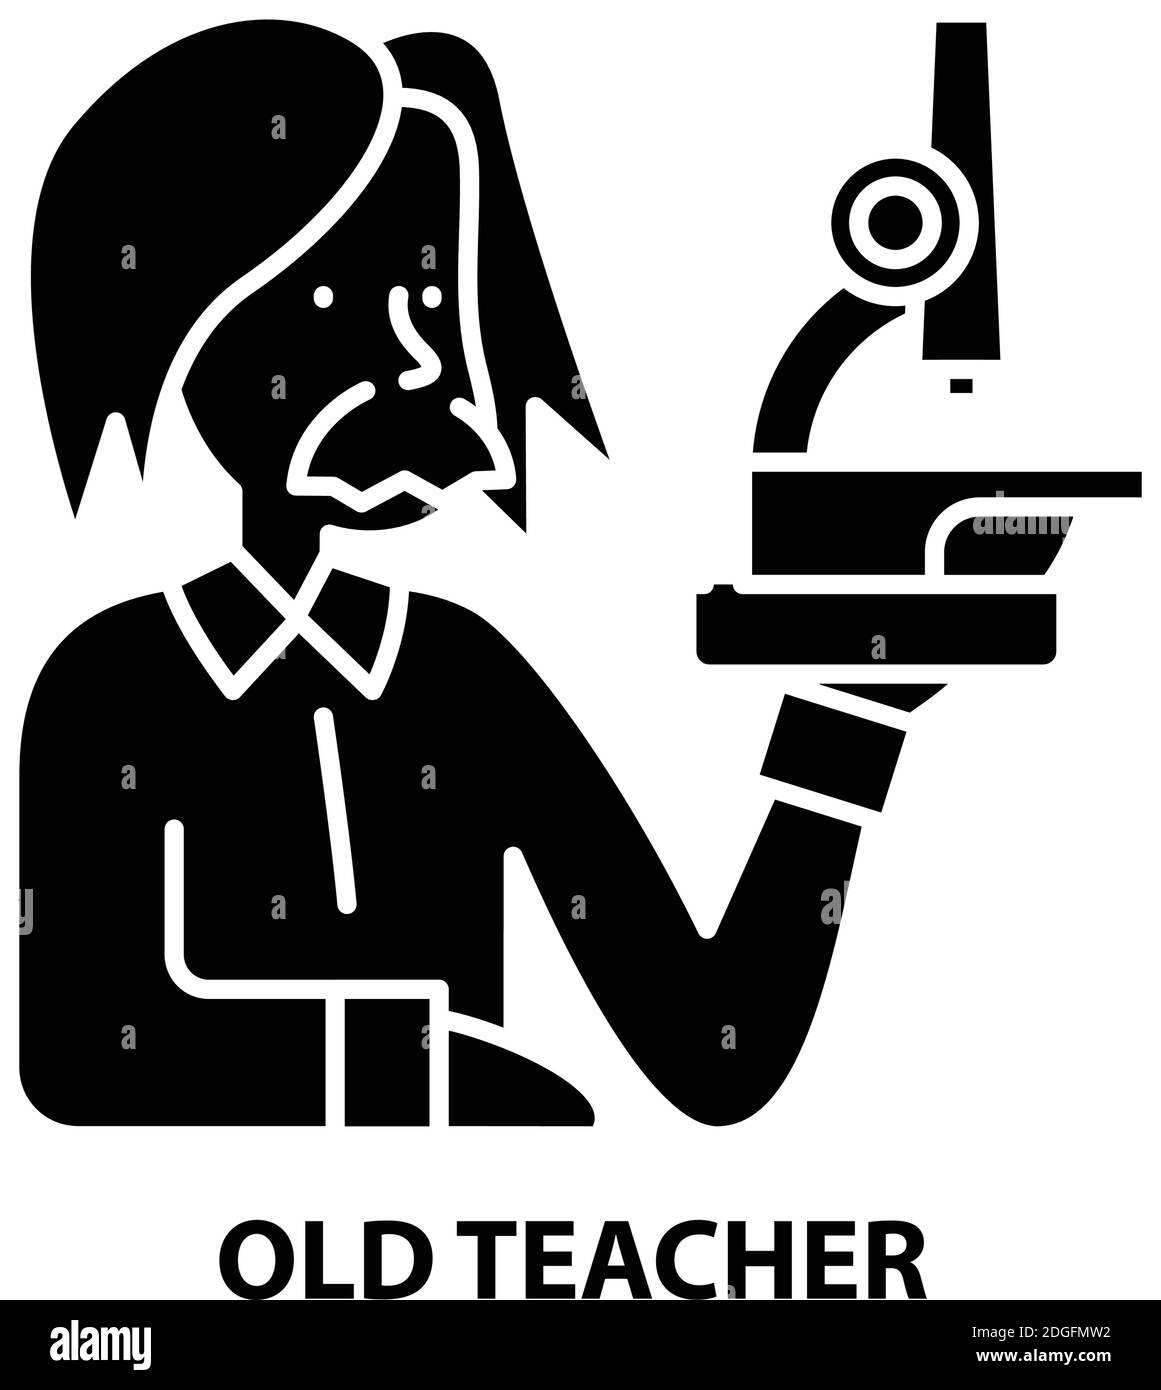 old teacher icon, black vector sign with editable strokes, concept illustration Stock Vector